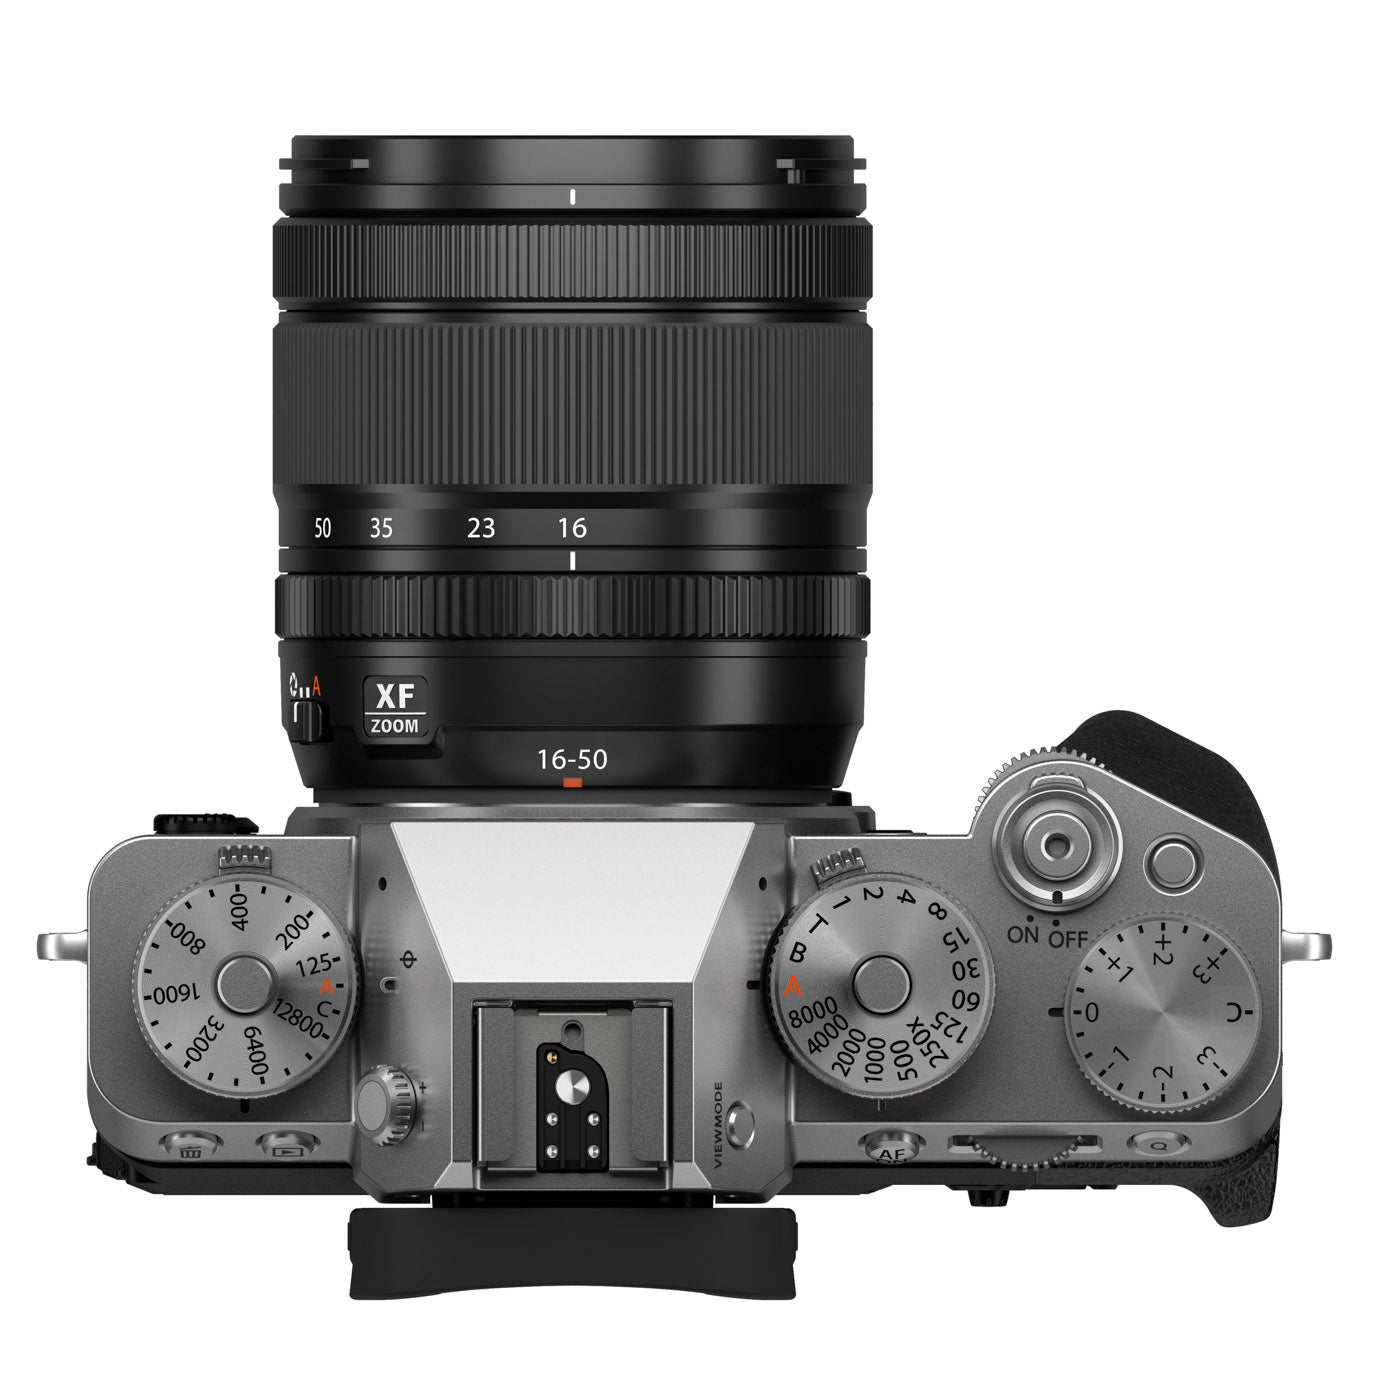 Fujifilm X-T5 Kit with XF 16-50mm Lens - Silver